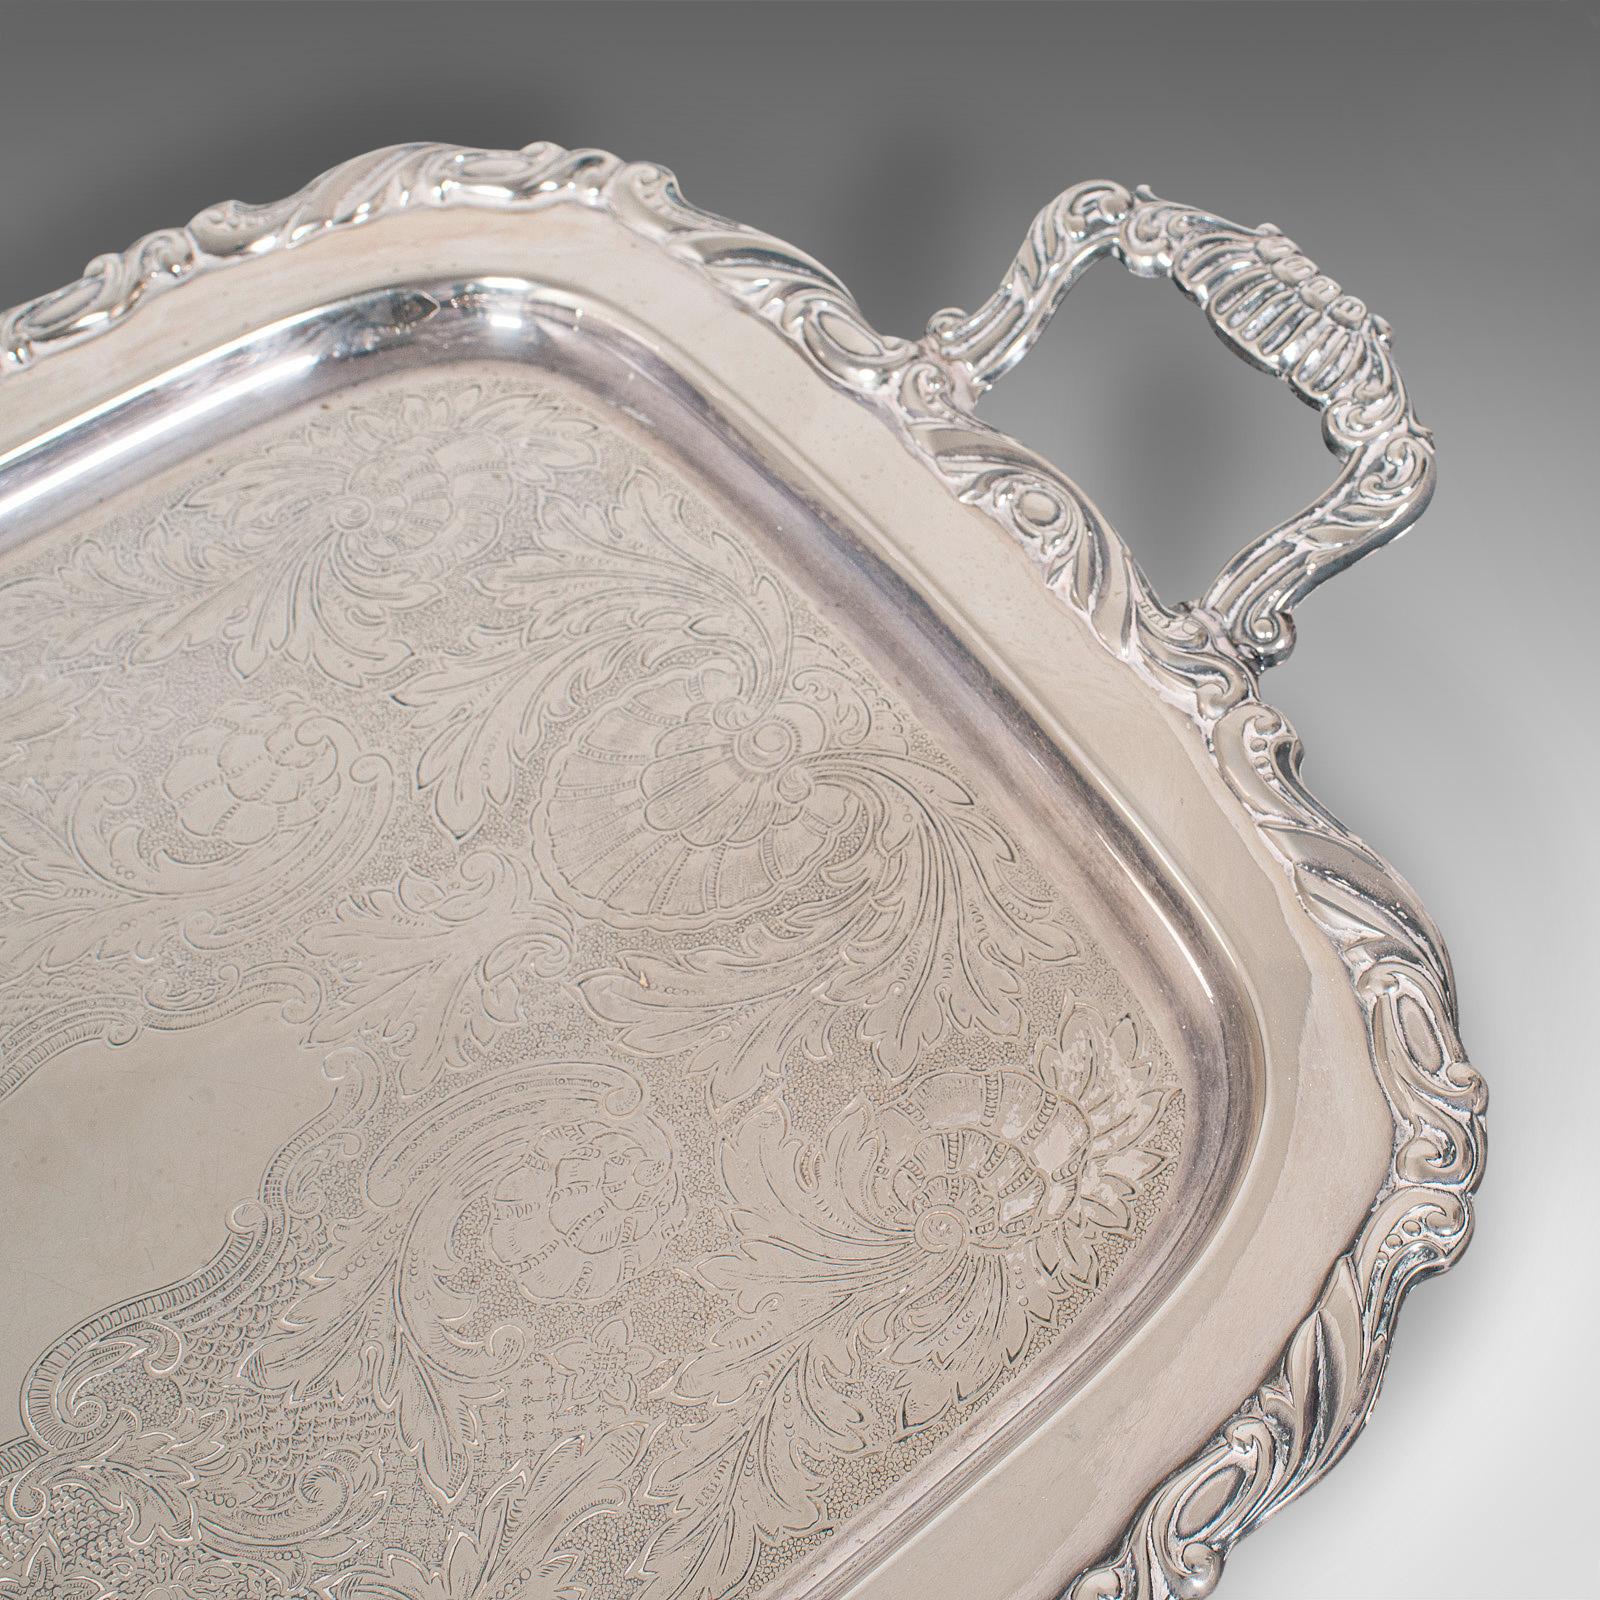 Vintage Butler's Serving Tray, American, Silver Plate, Tea, Platter, Oneida For Sale 2